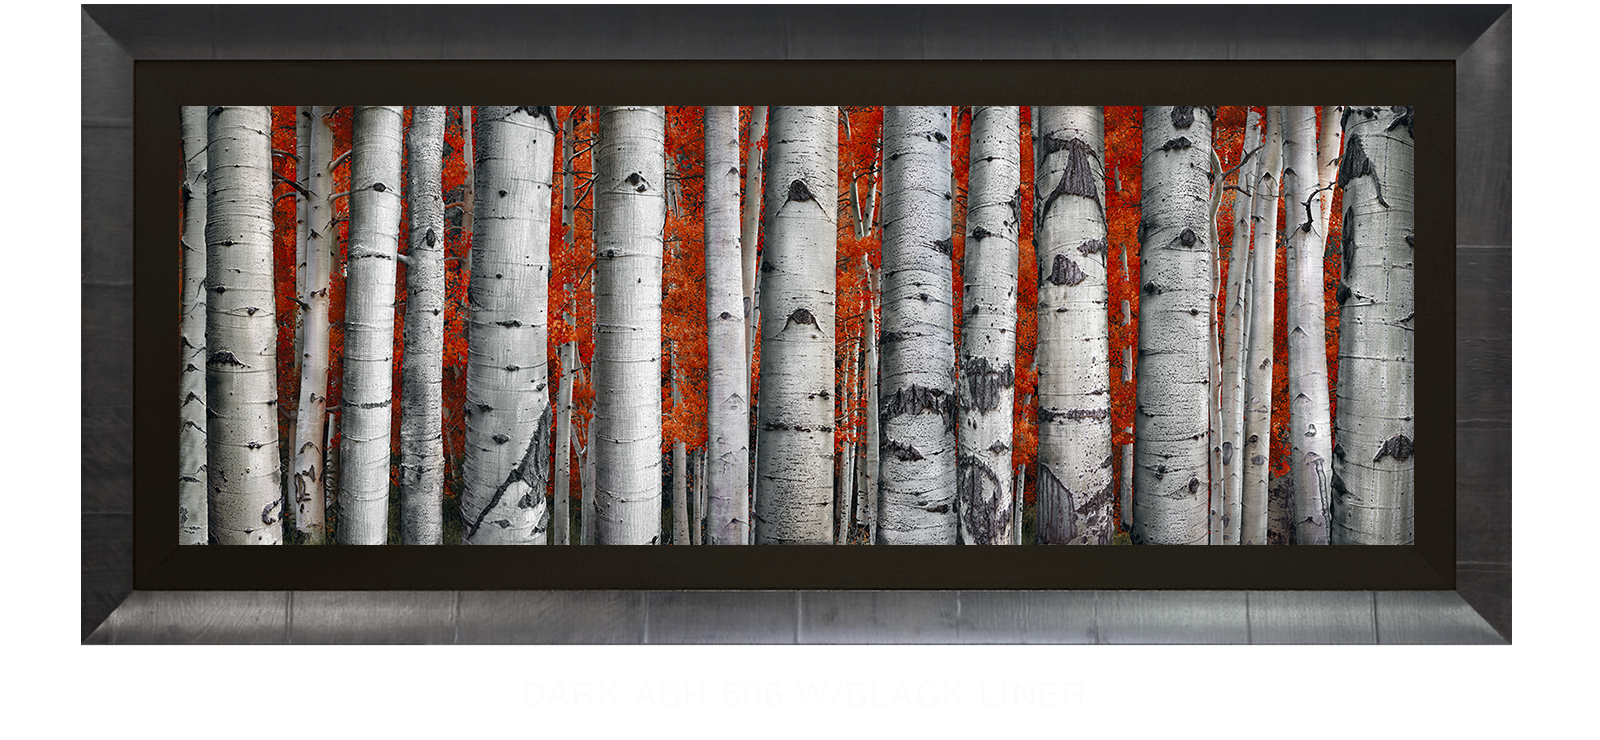 17ASPEN Dark Ash 606 w_Blk Liner T